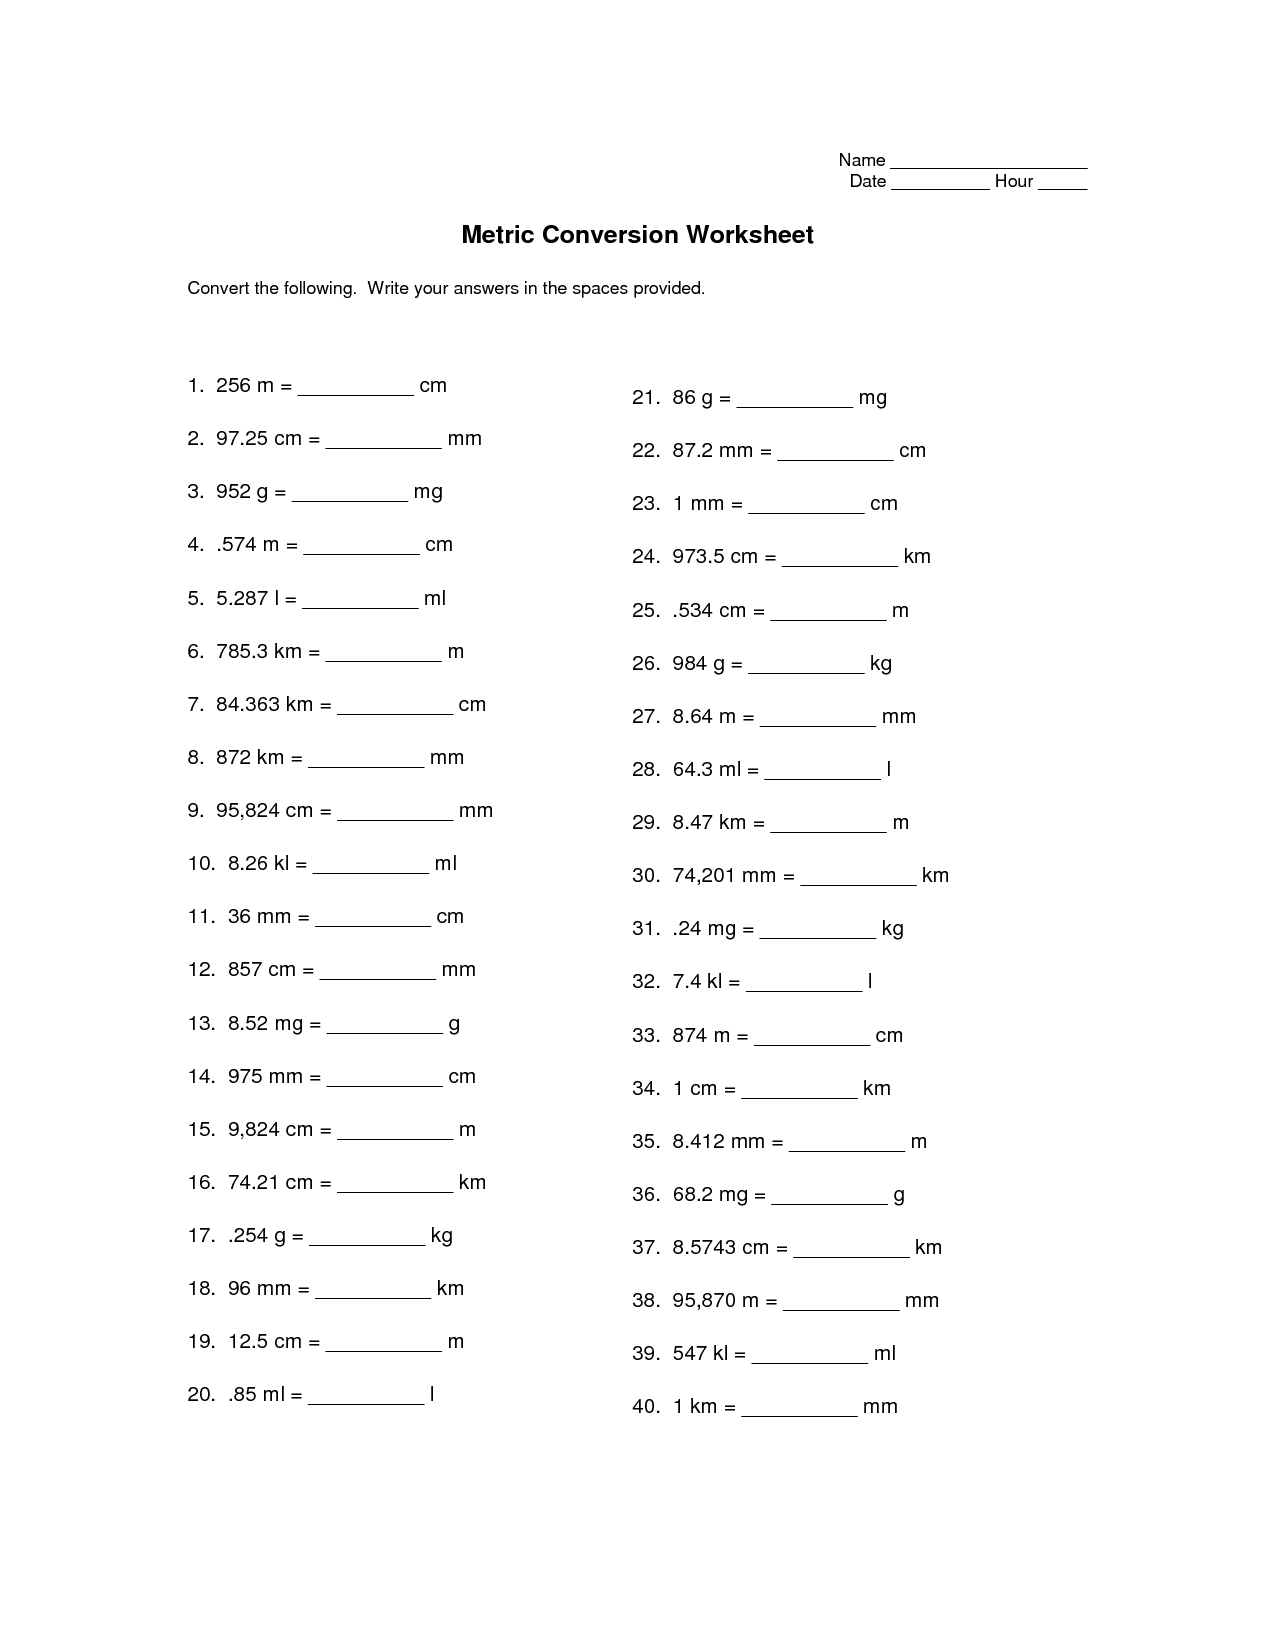 math-metric-conversions-worksheet